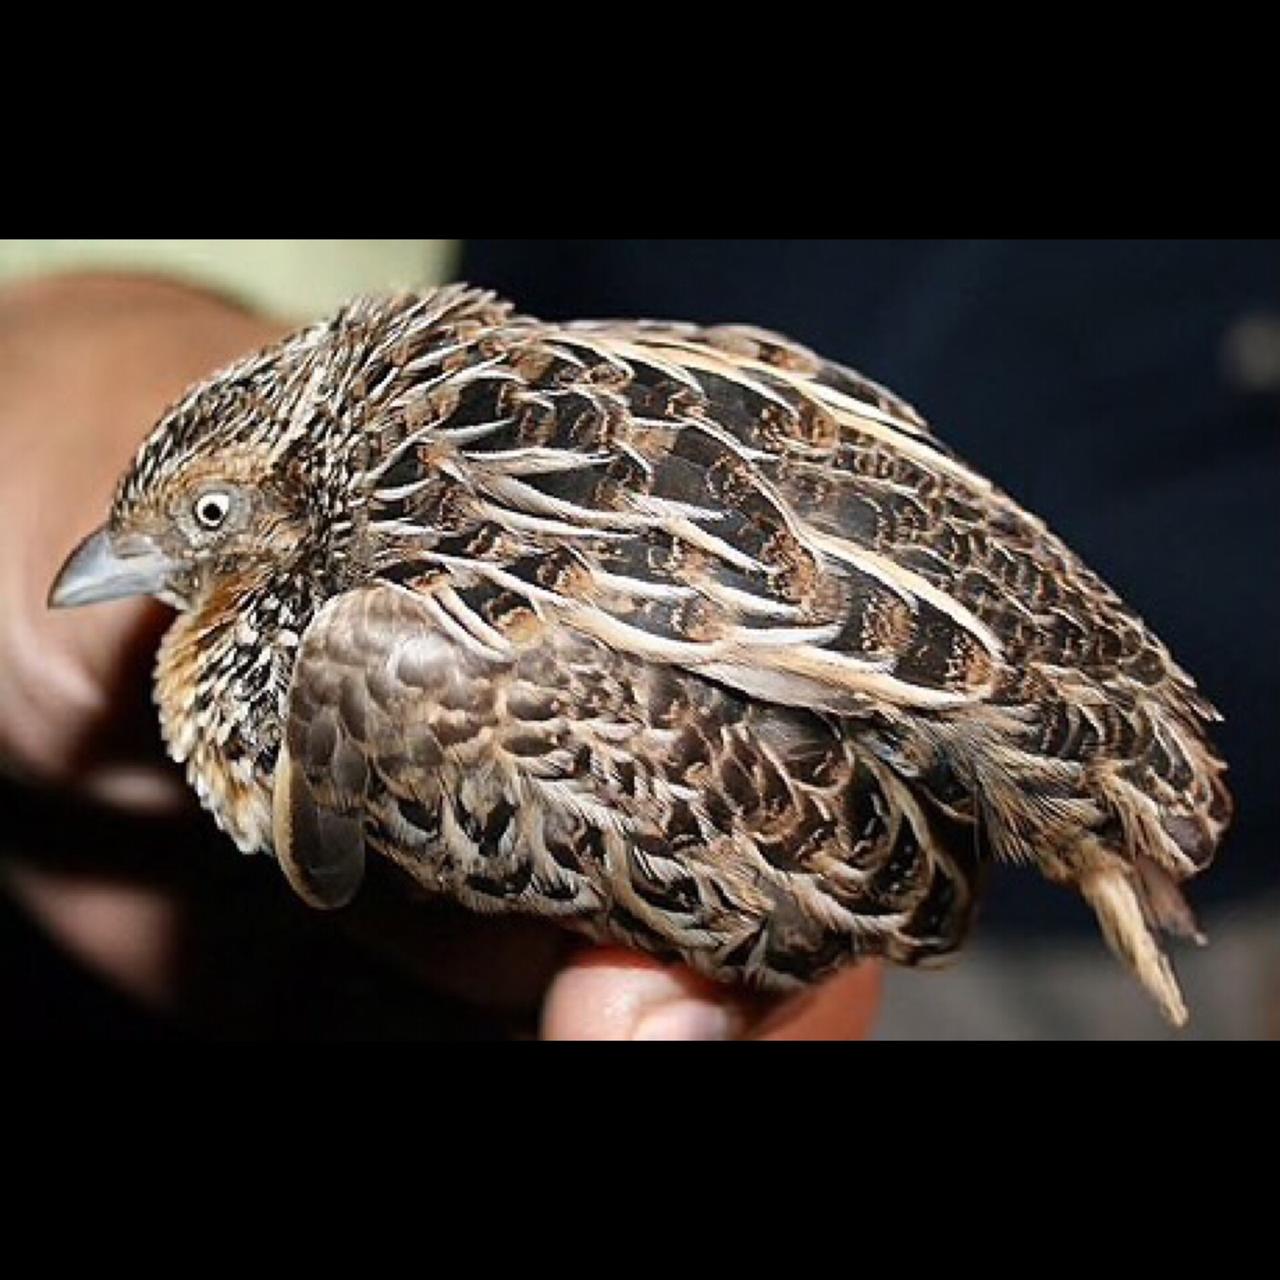 quail hunting banned across punjab